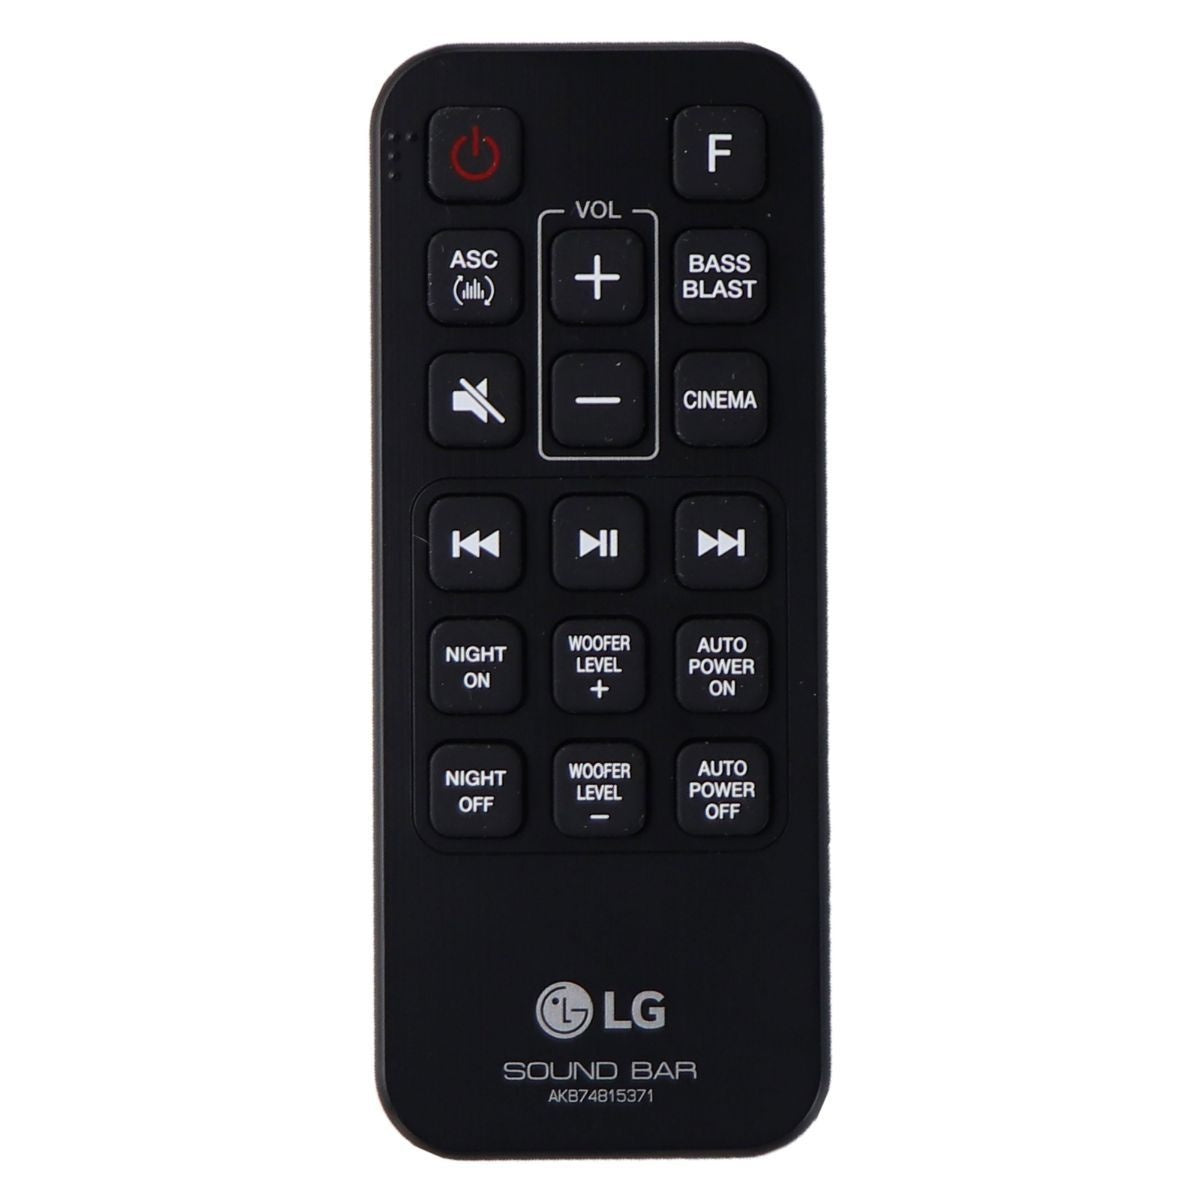 LG Remote Control (AKB74815371) for LG SJ3 / LG SJ4 Soundbars - Black TV, Video & Audio Accessories - Remote Controls LG    - Simple Cell Bulk Wholesale Pricing - USA Seller